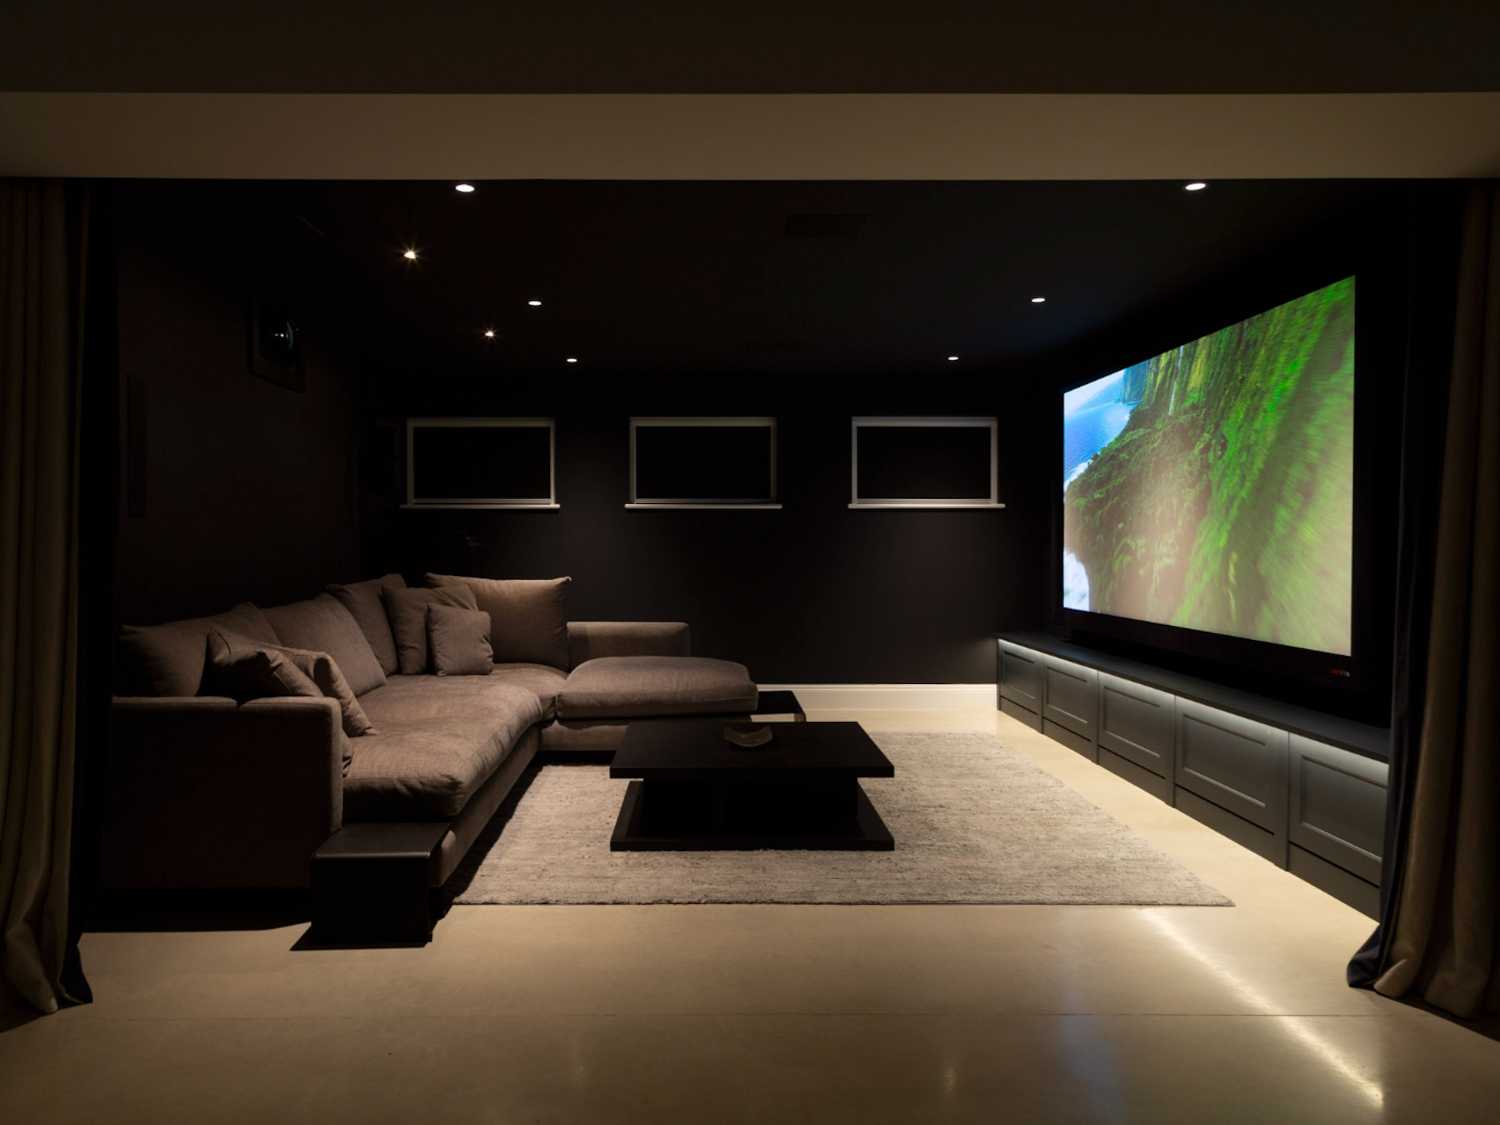 High-end home cinema rooms